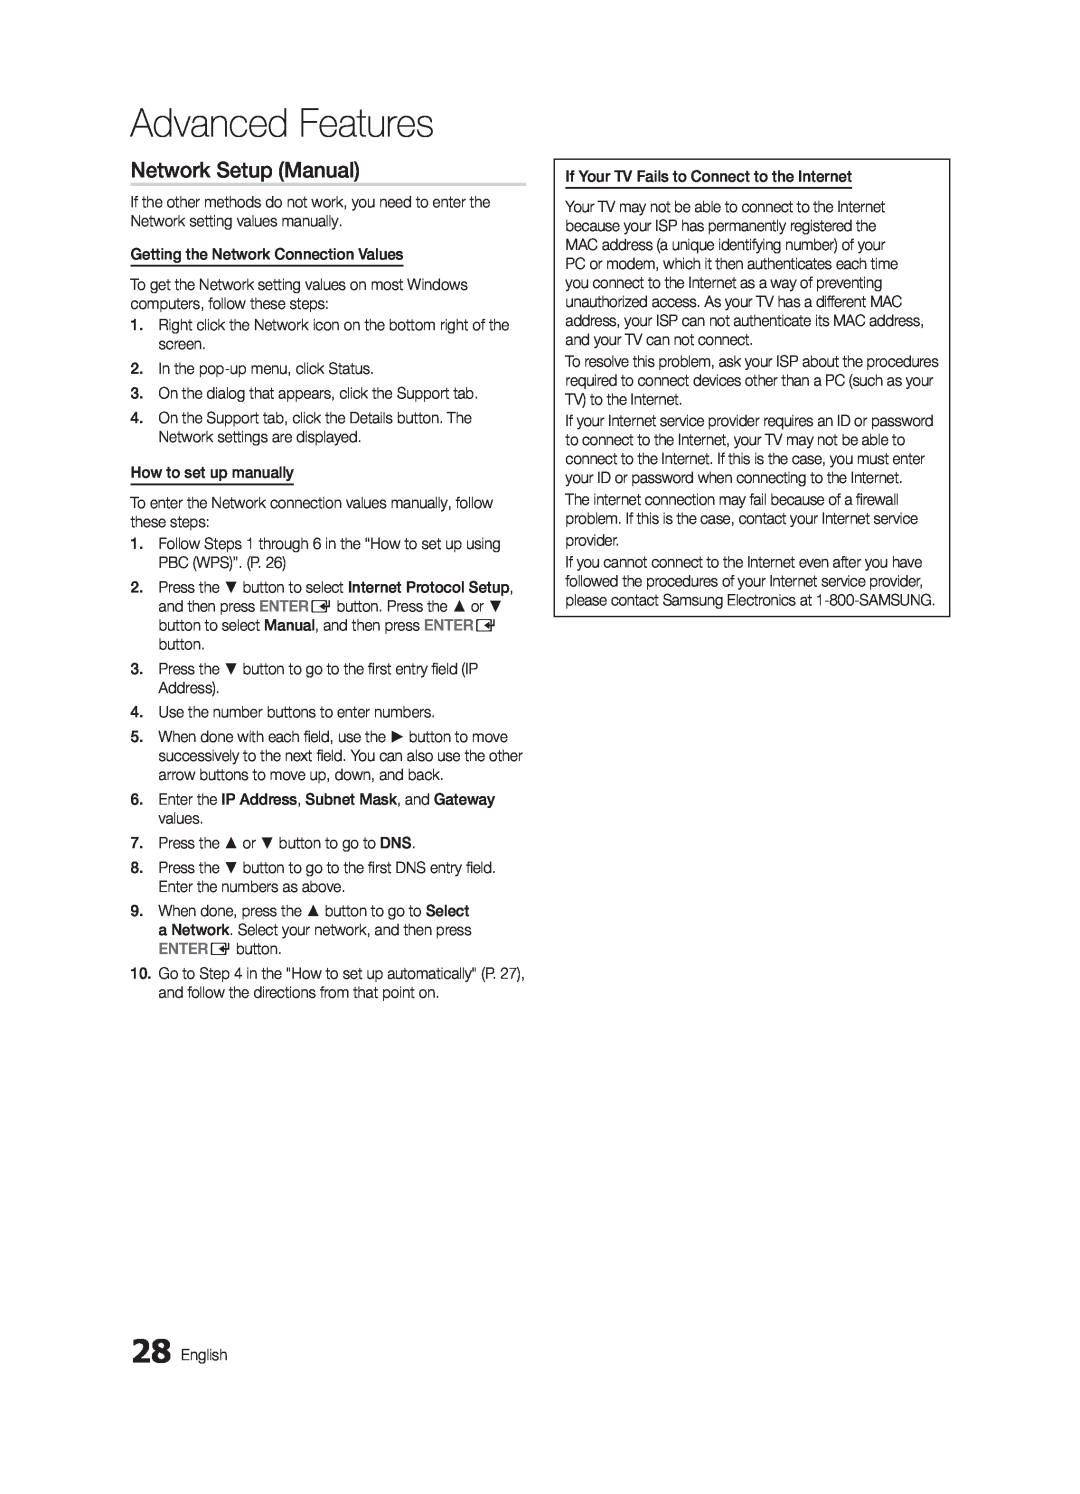 Samsung LN32C550 user manual Advanced Features, Network Setup Manual 